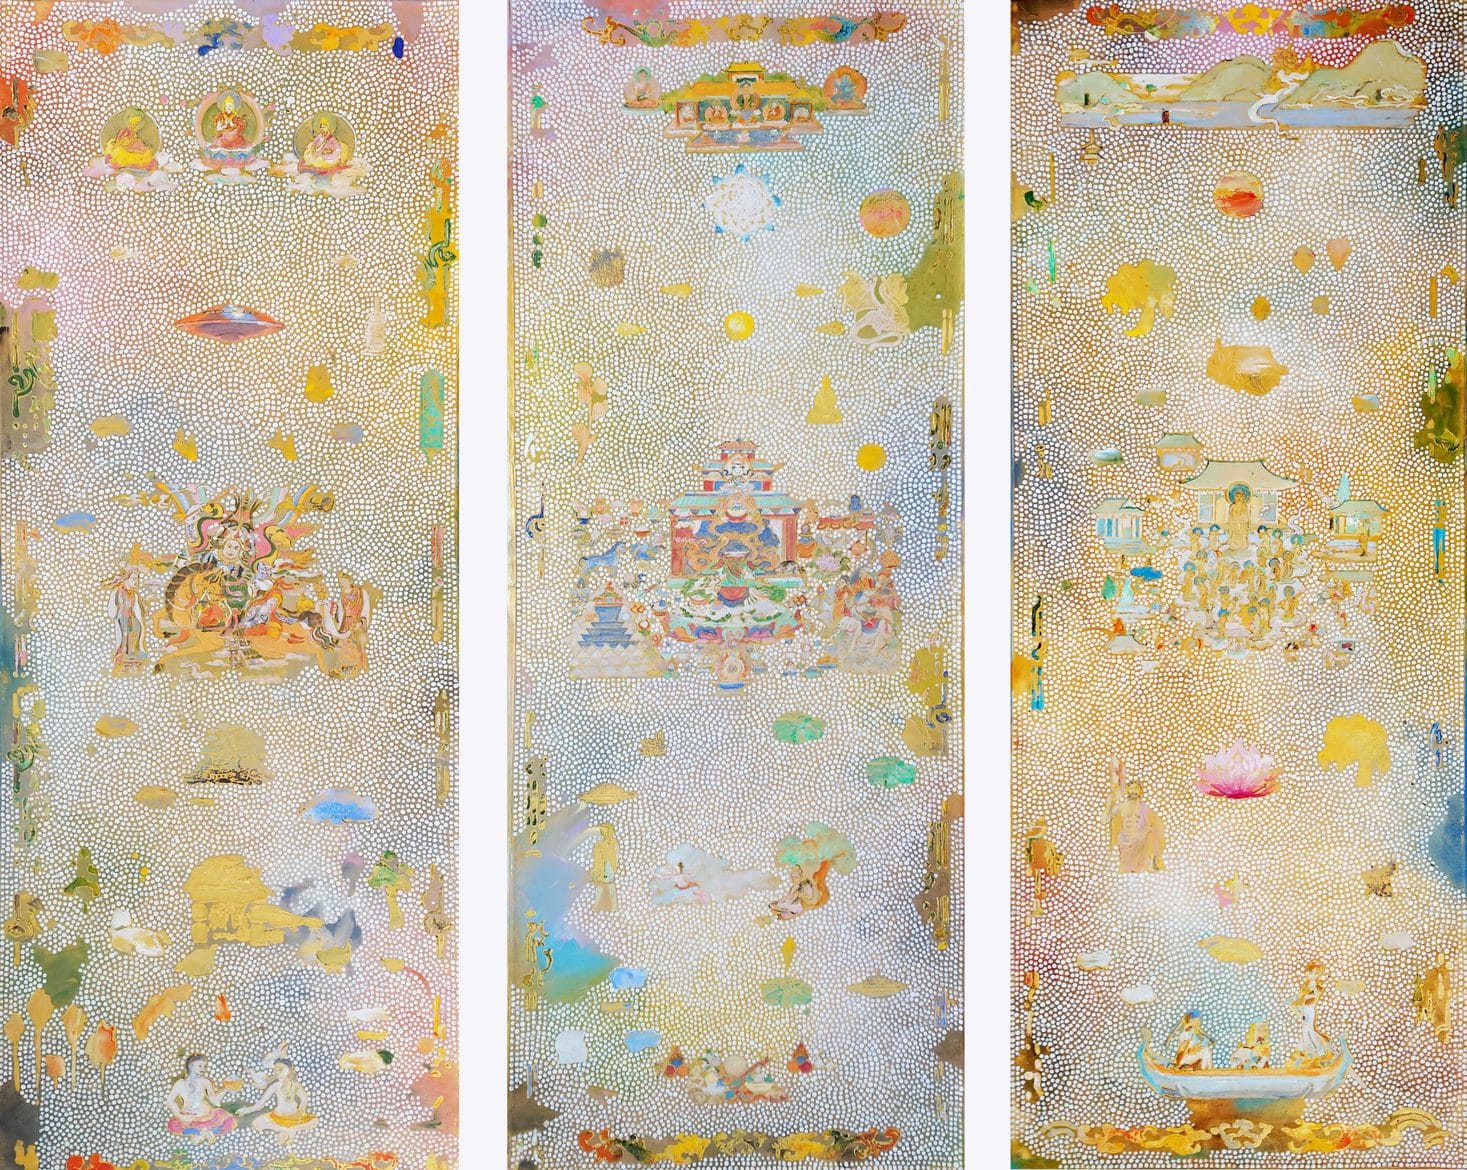 ‘King Gesar’, 2021, set of 3 panels, 135 x 122 cm overall